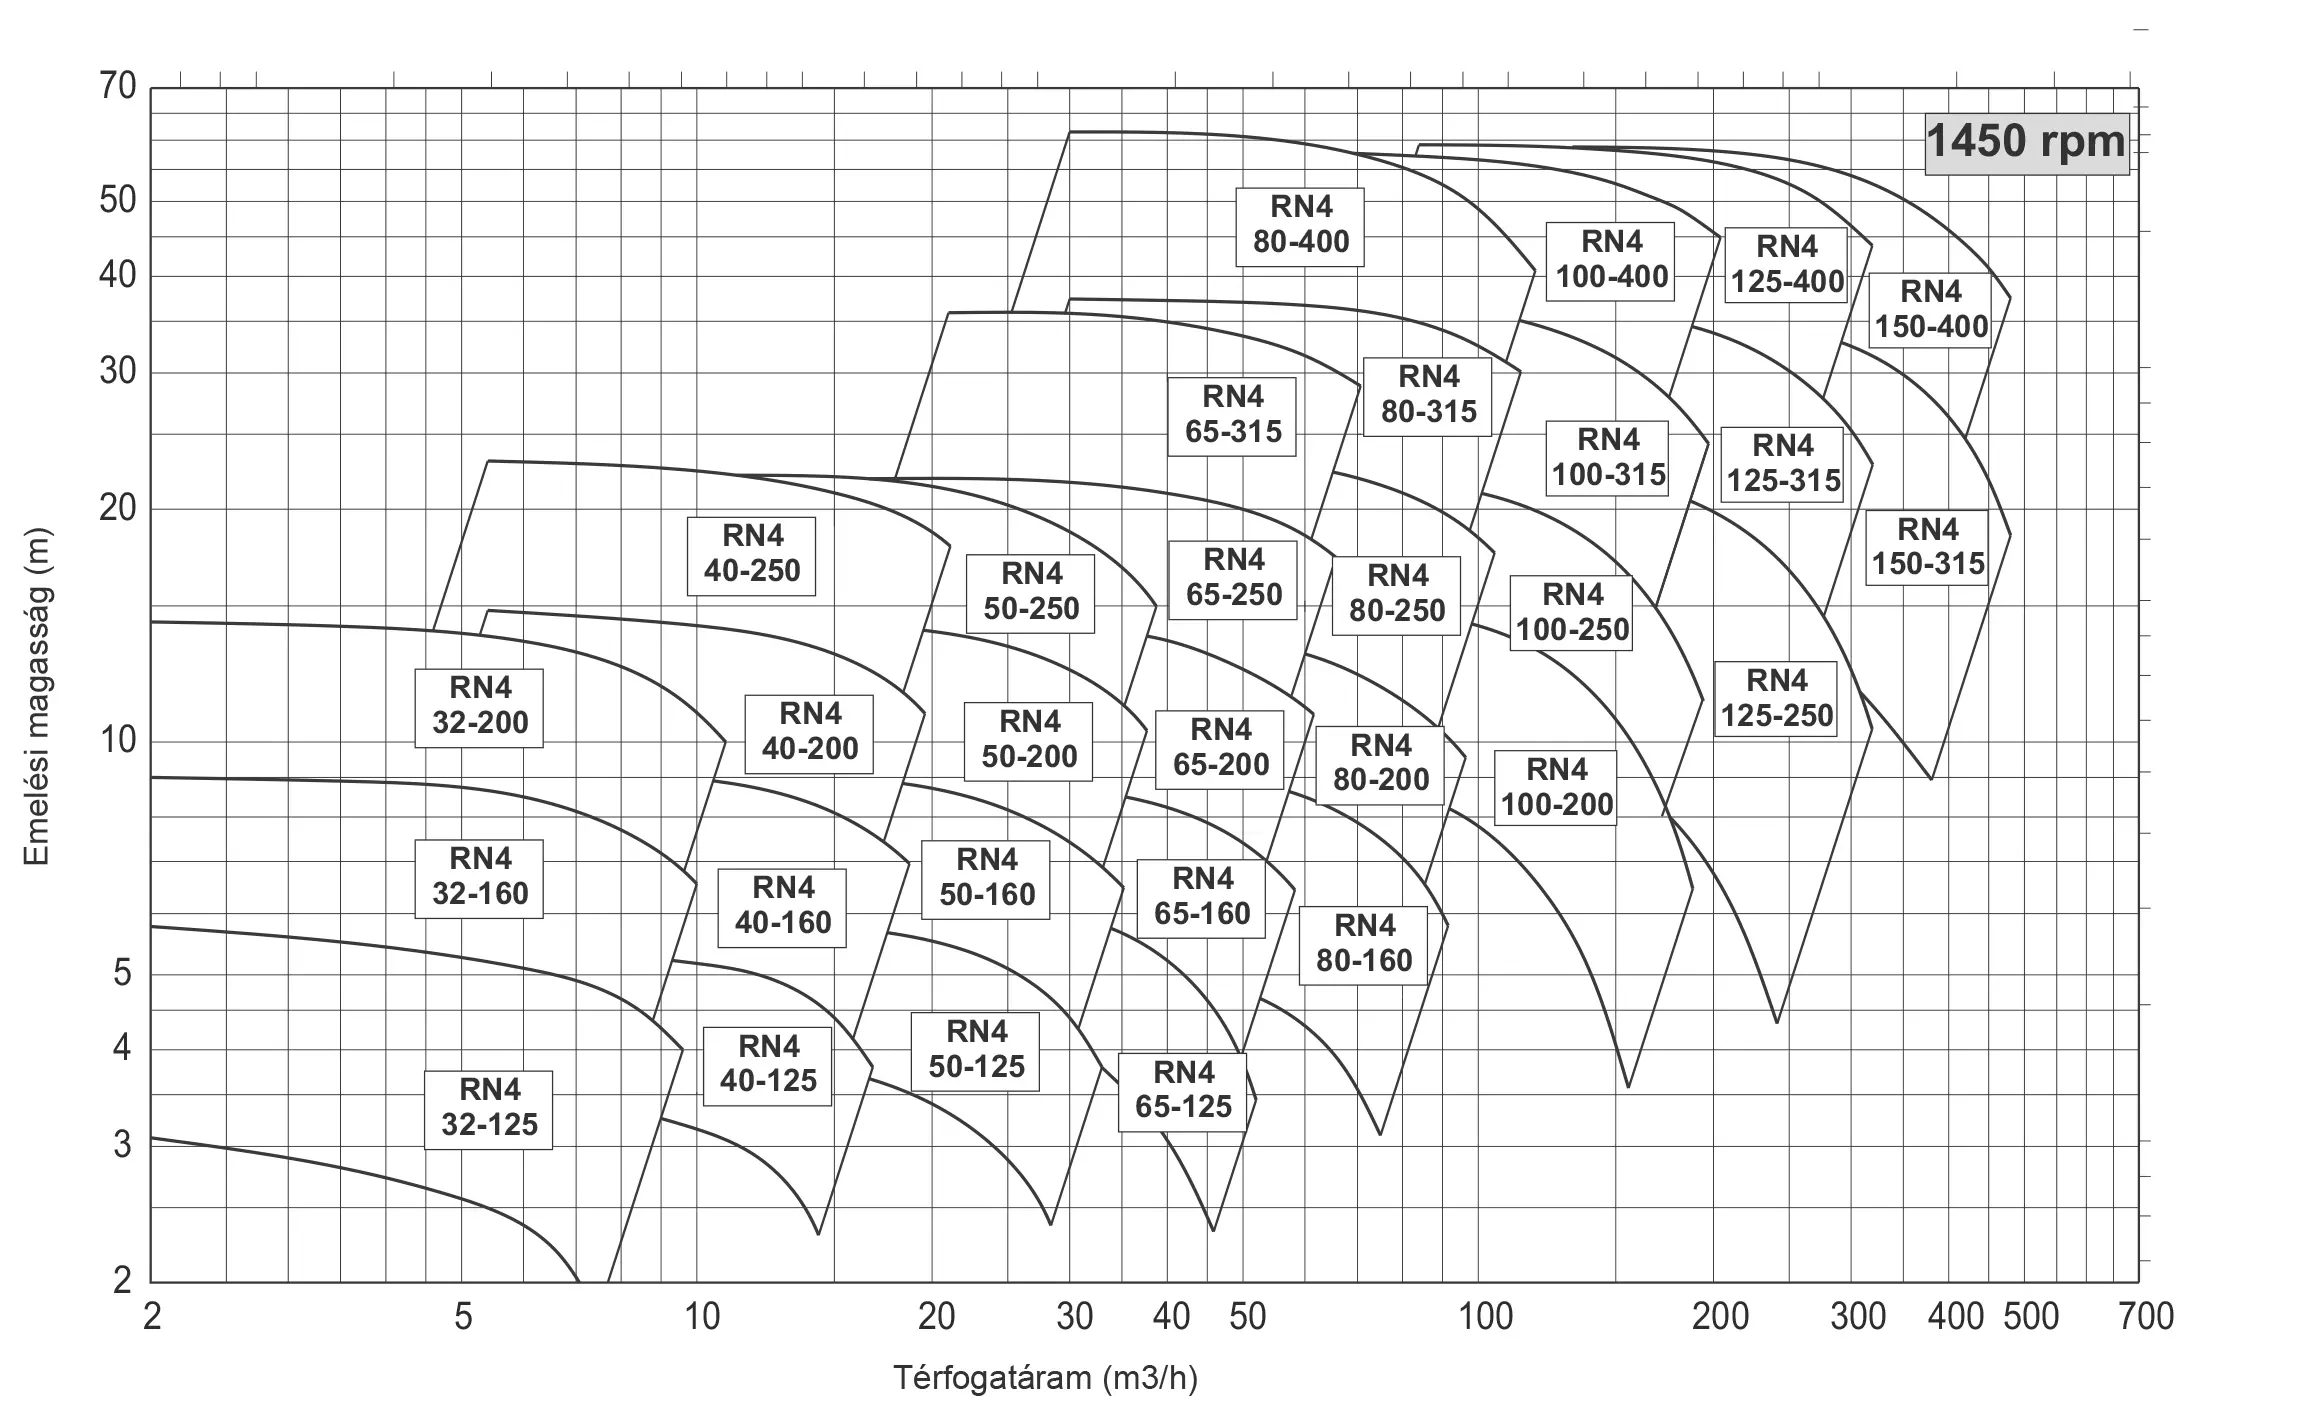 RN Performance curves